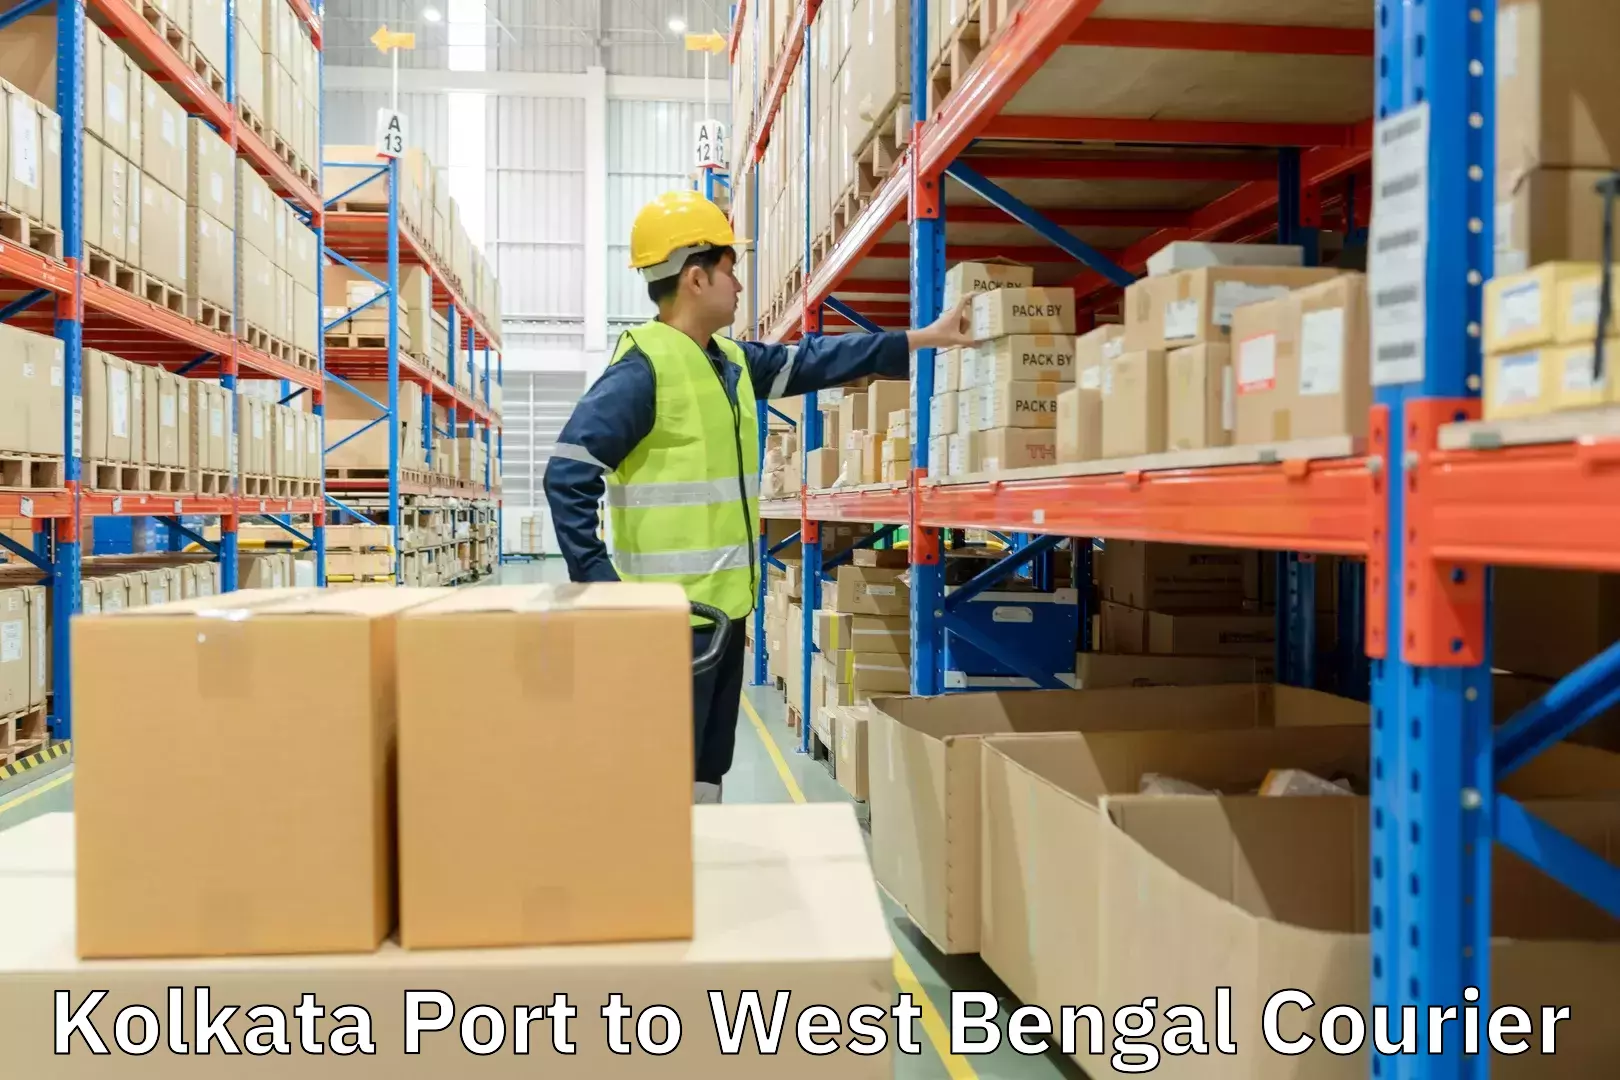 Courier service partnerships Kolkata Port to Bally